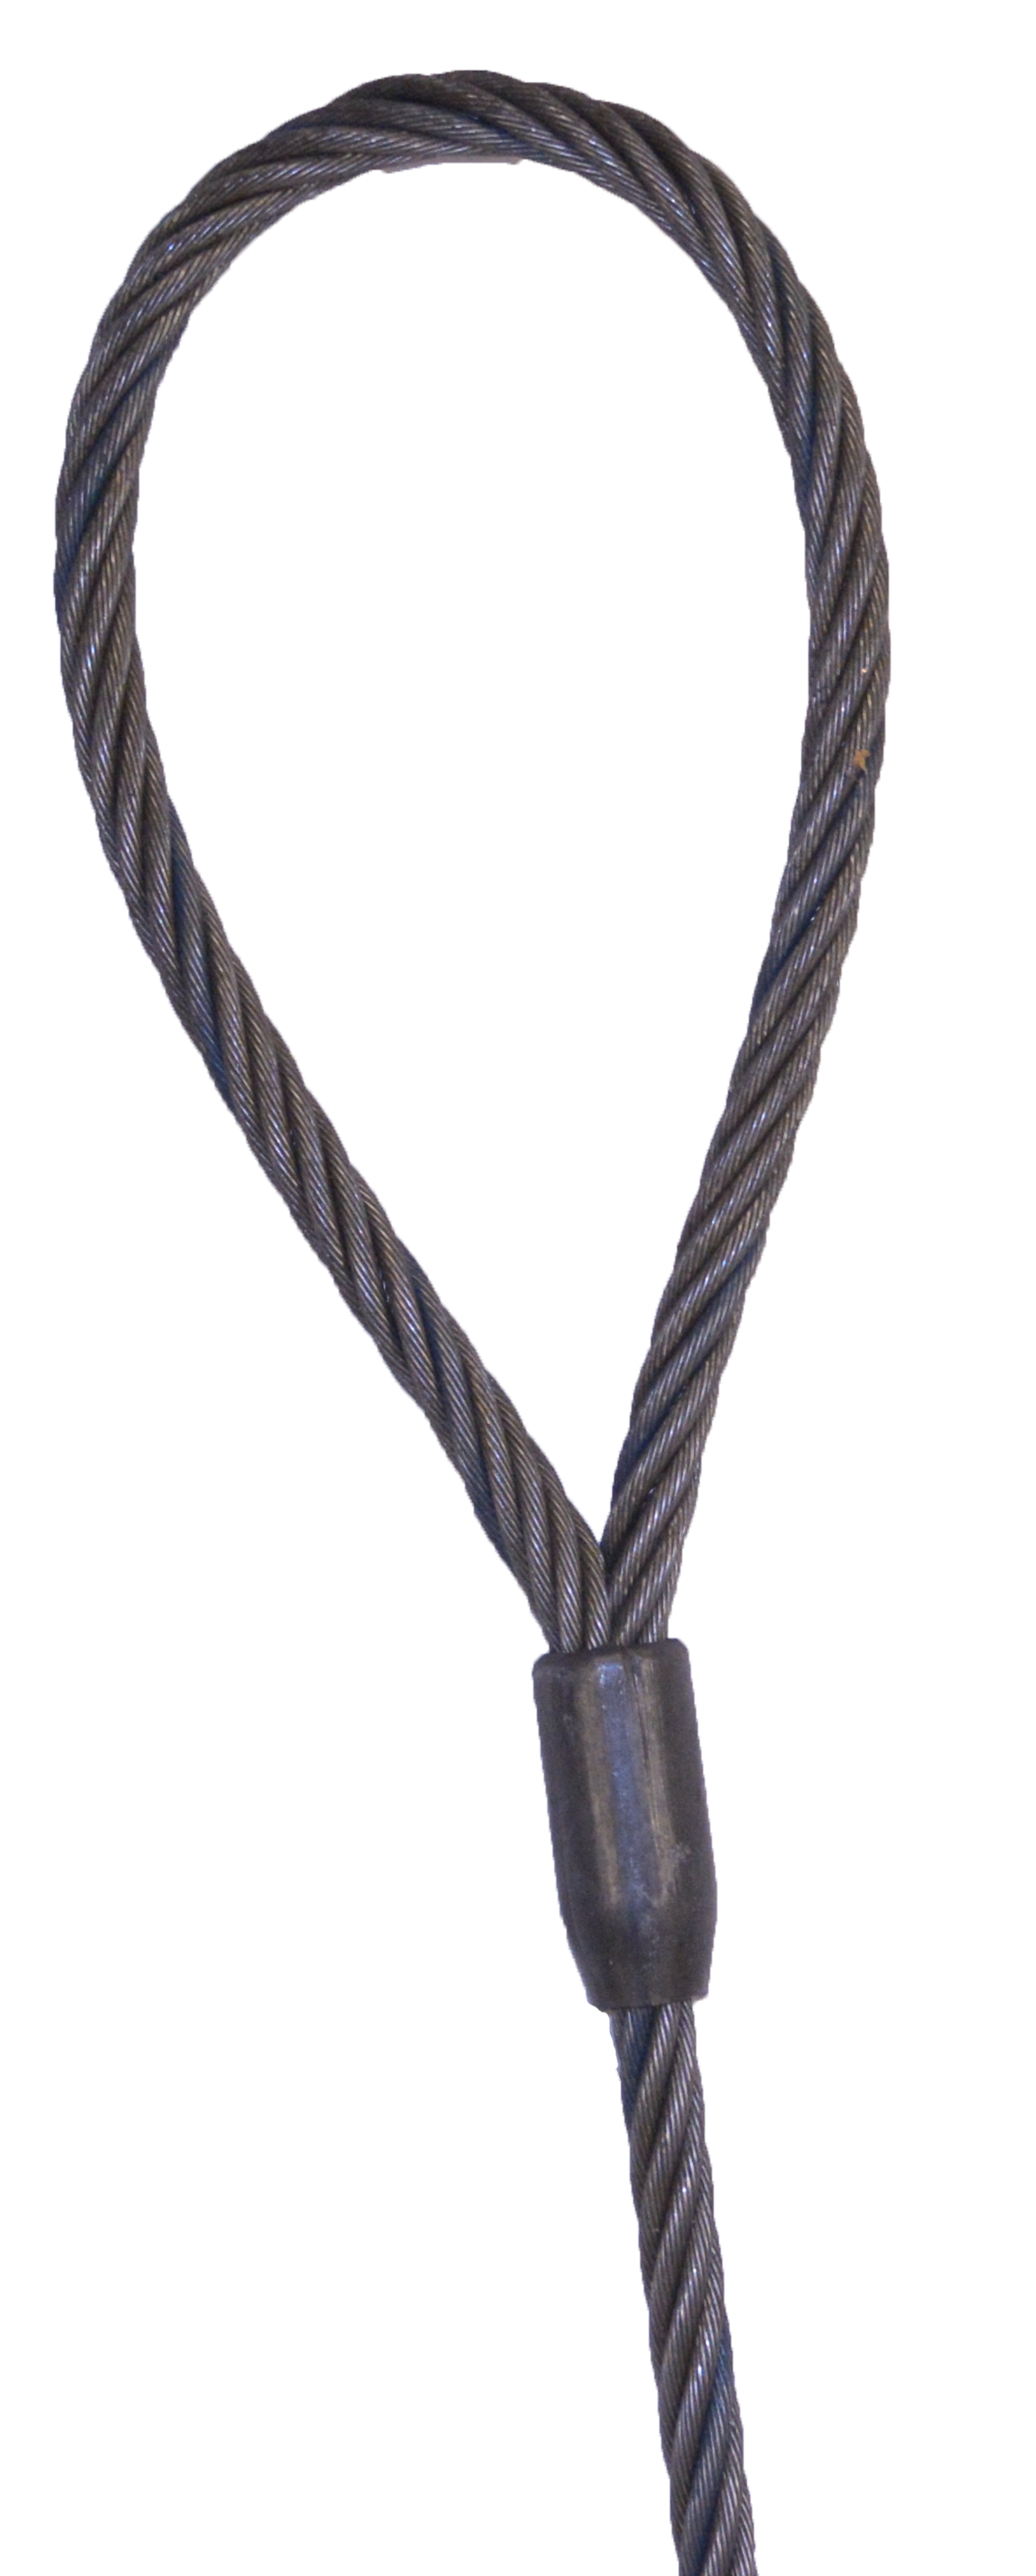 Flemish Eye Sling - I&I Sling, Inc. - Custom Wire Rope Slings